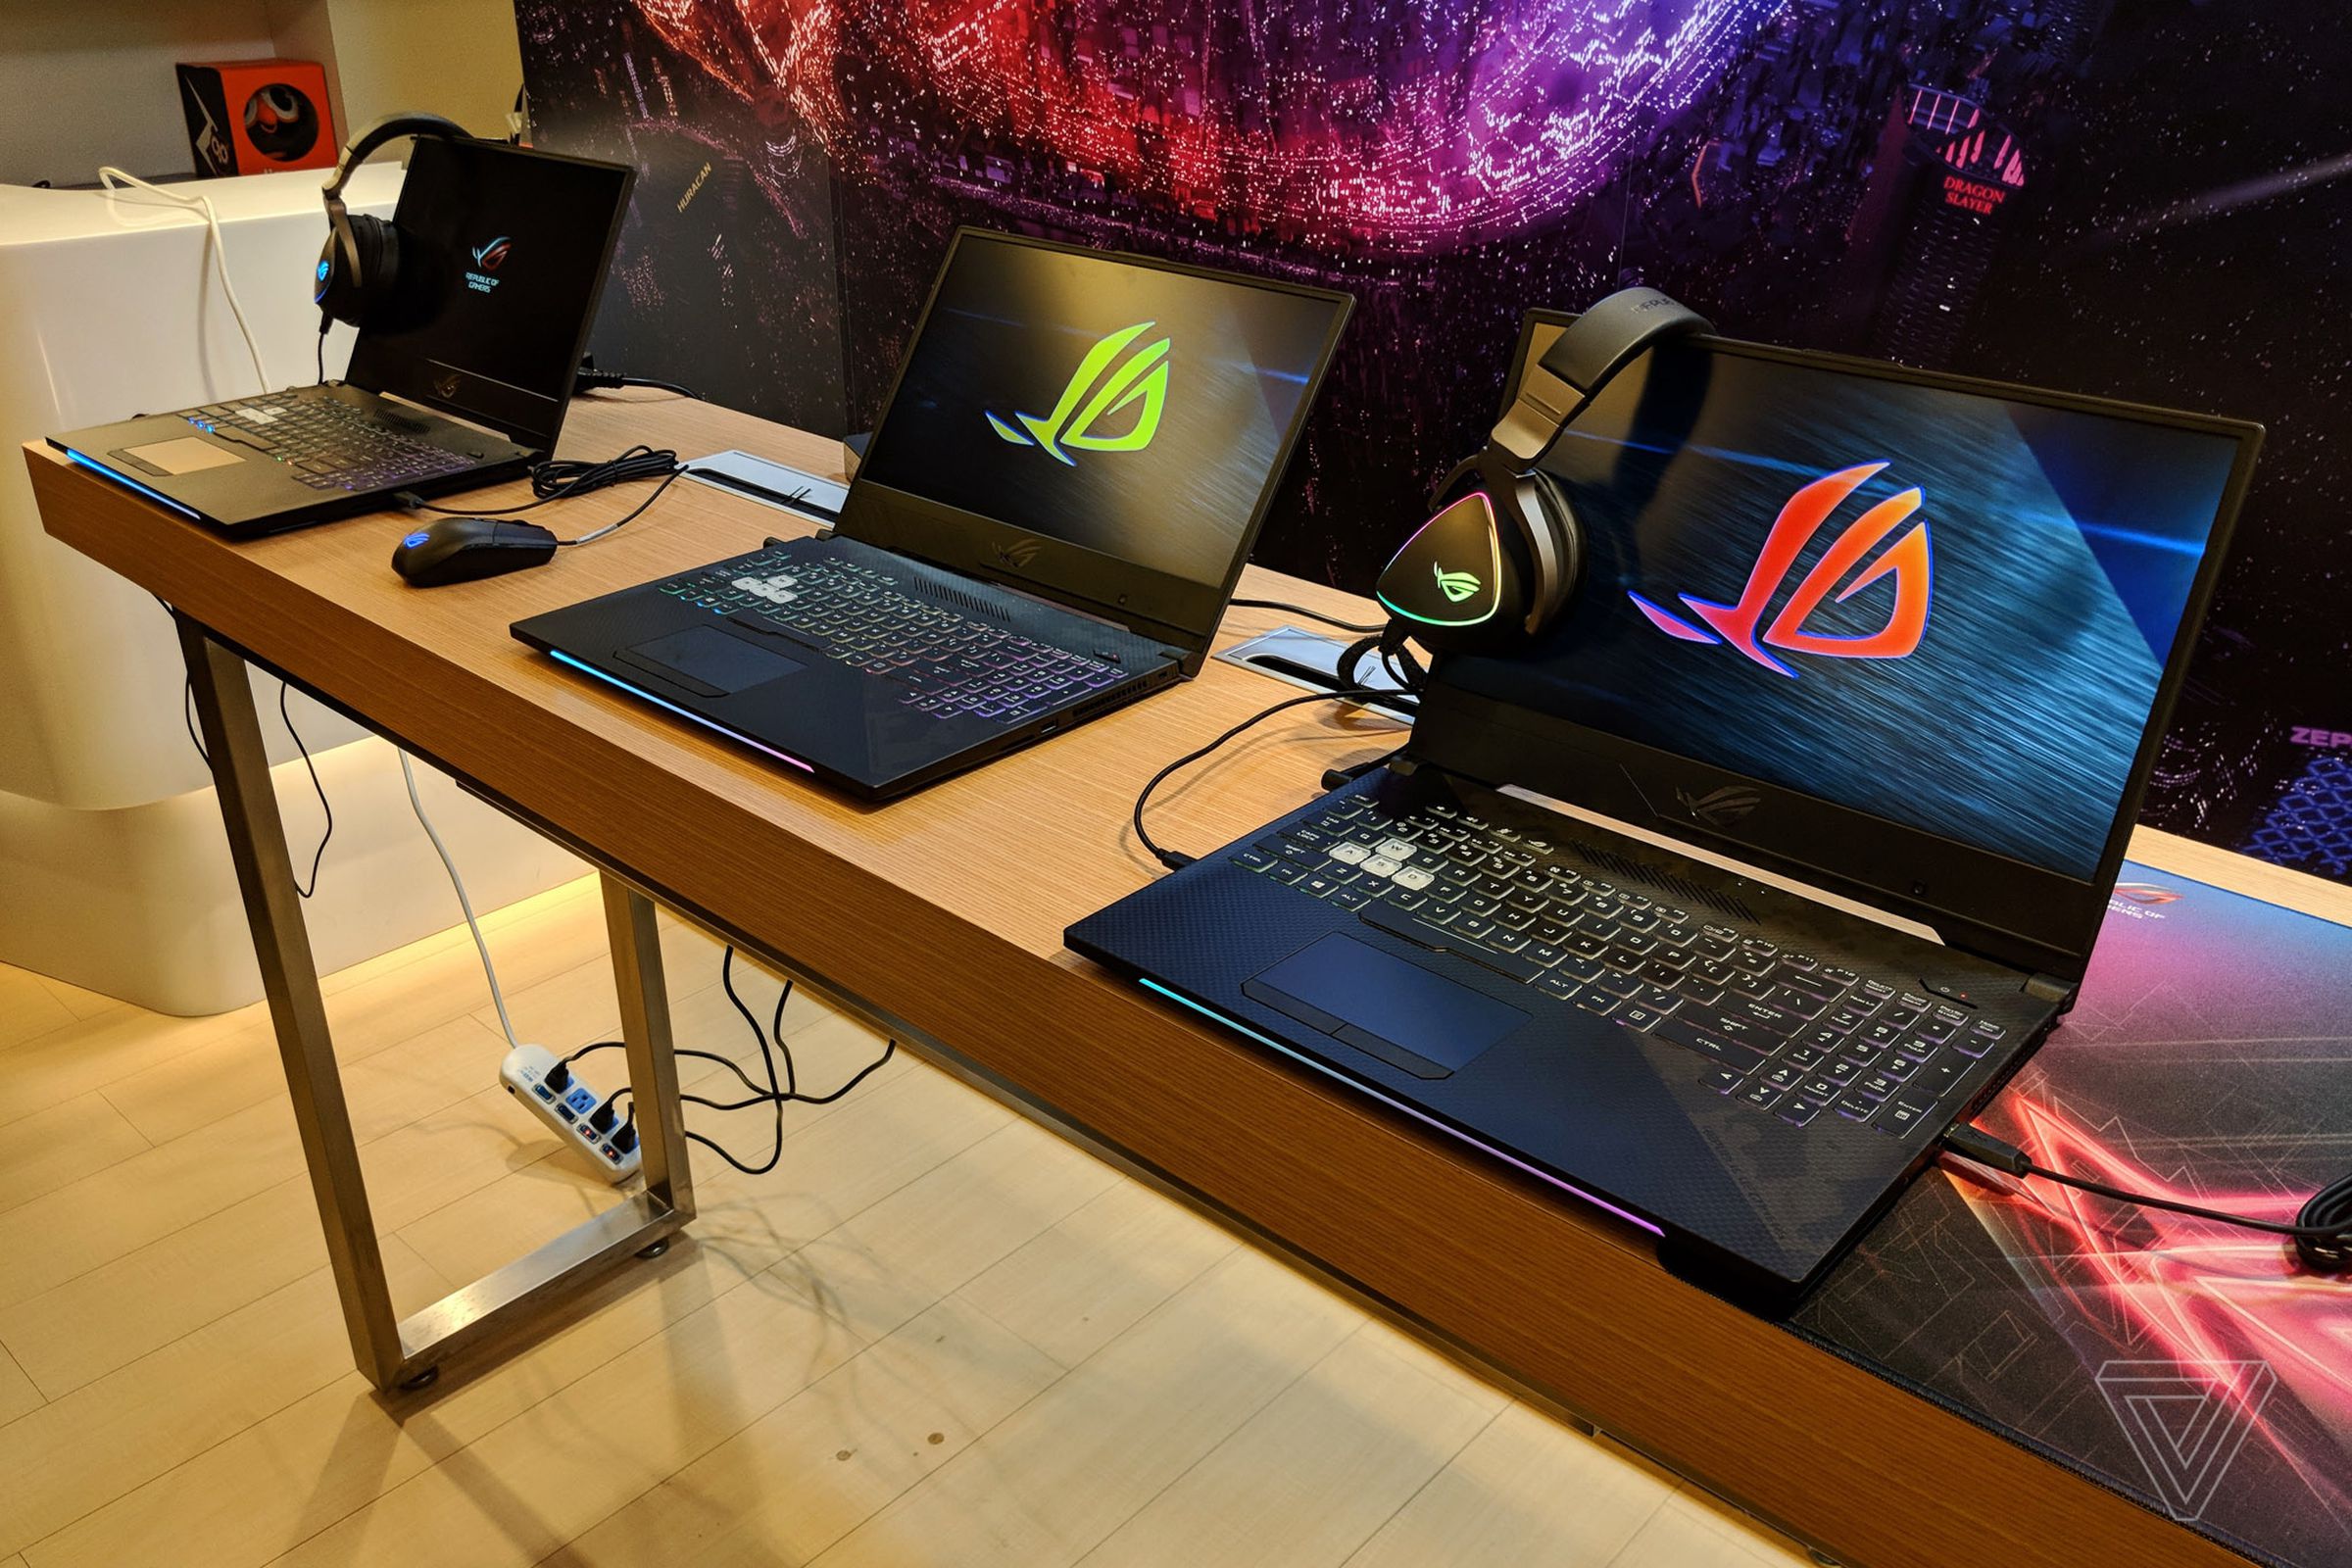 Asus Scar II laptops at Computex 2018